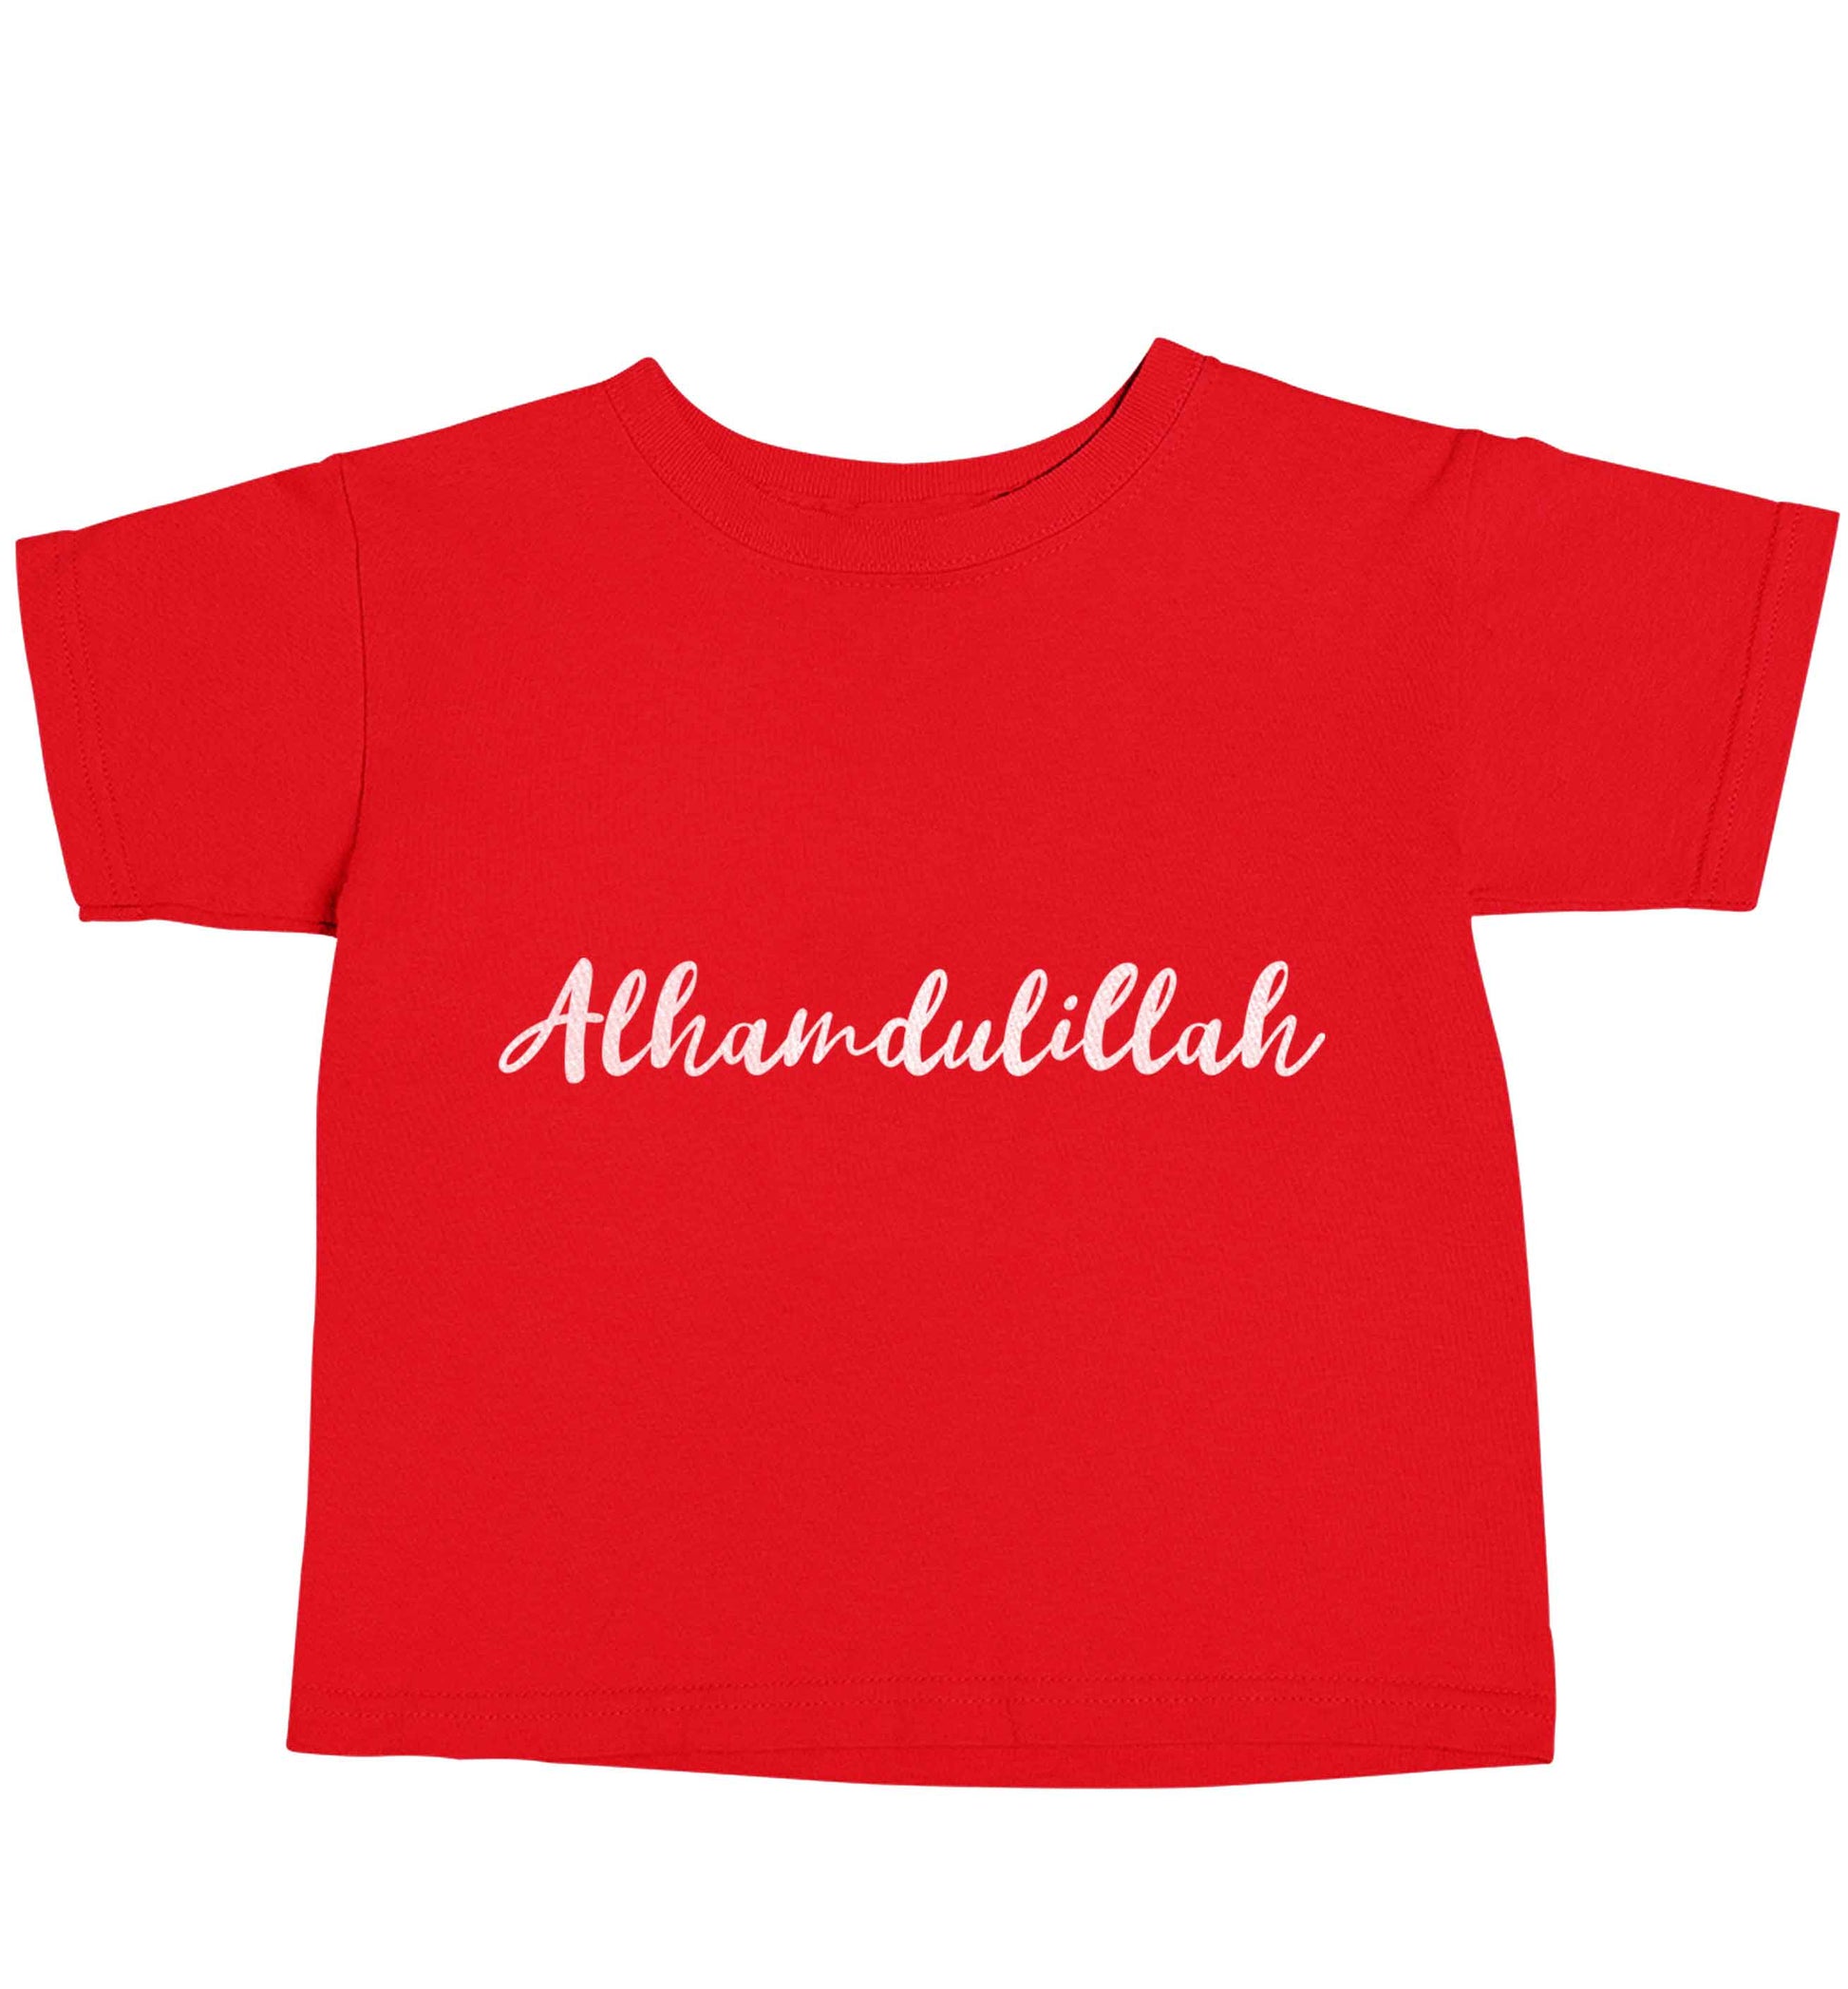 alhamdulillah red baby toddler Tshirt 2 Years